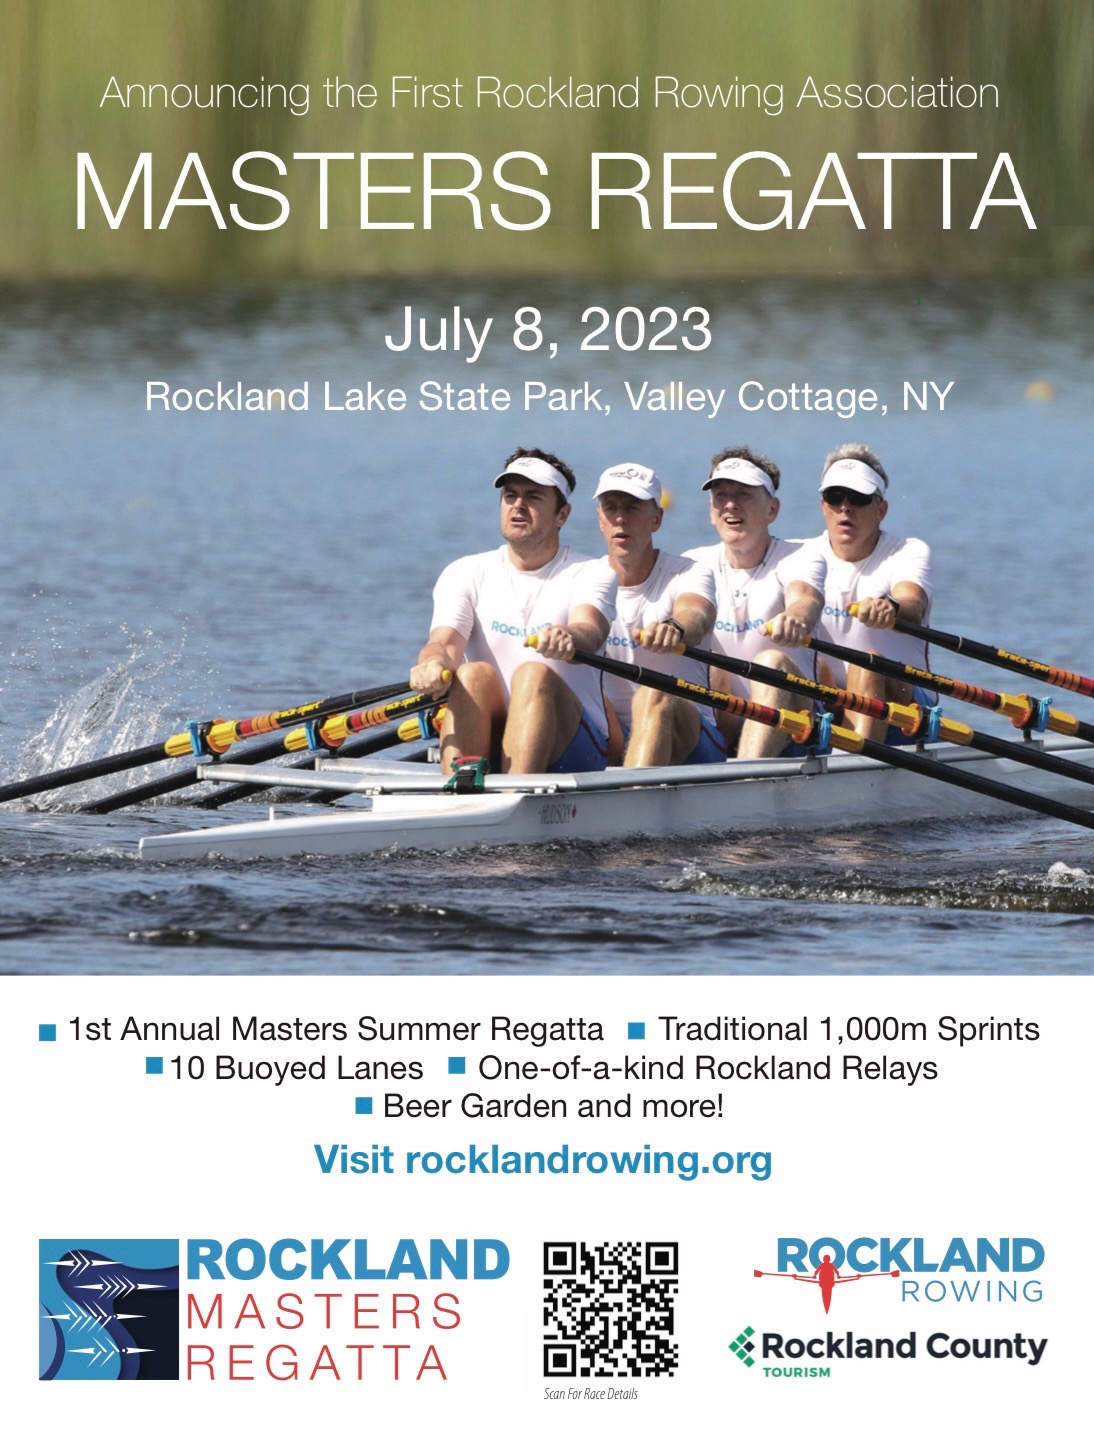 Rockland Masters Regatta